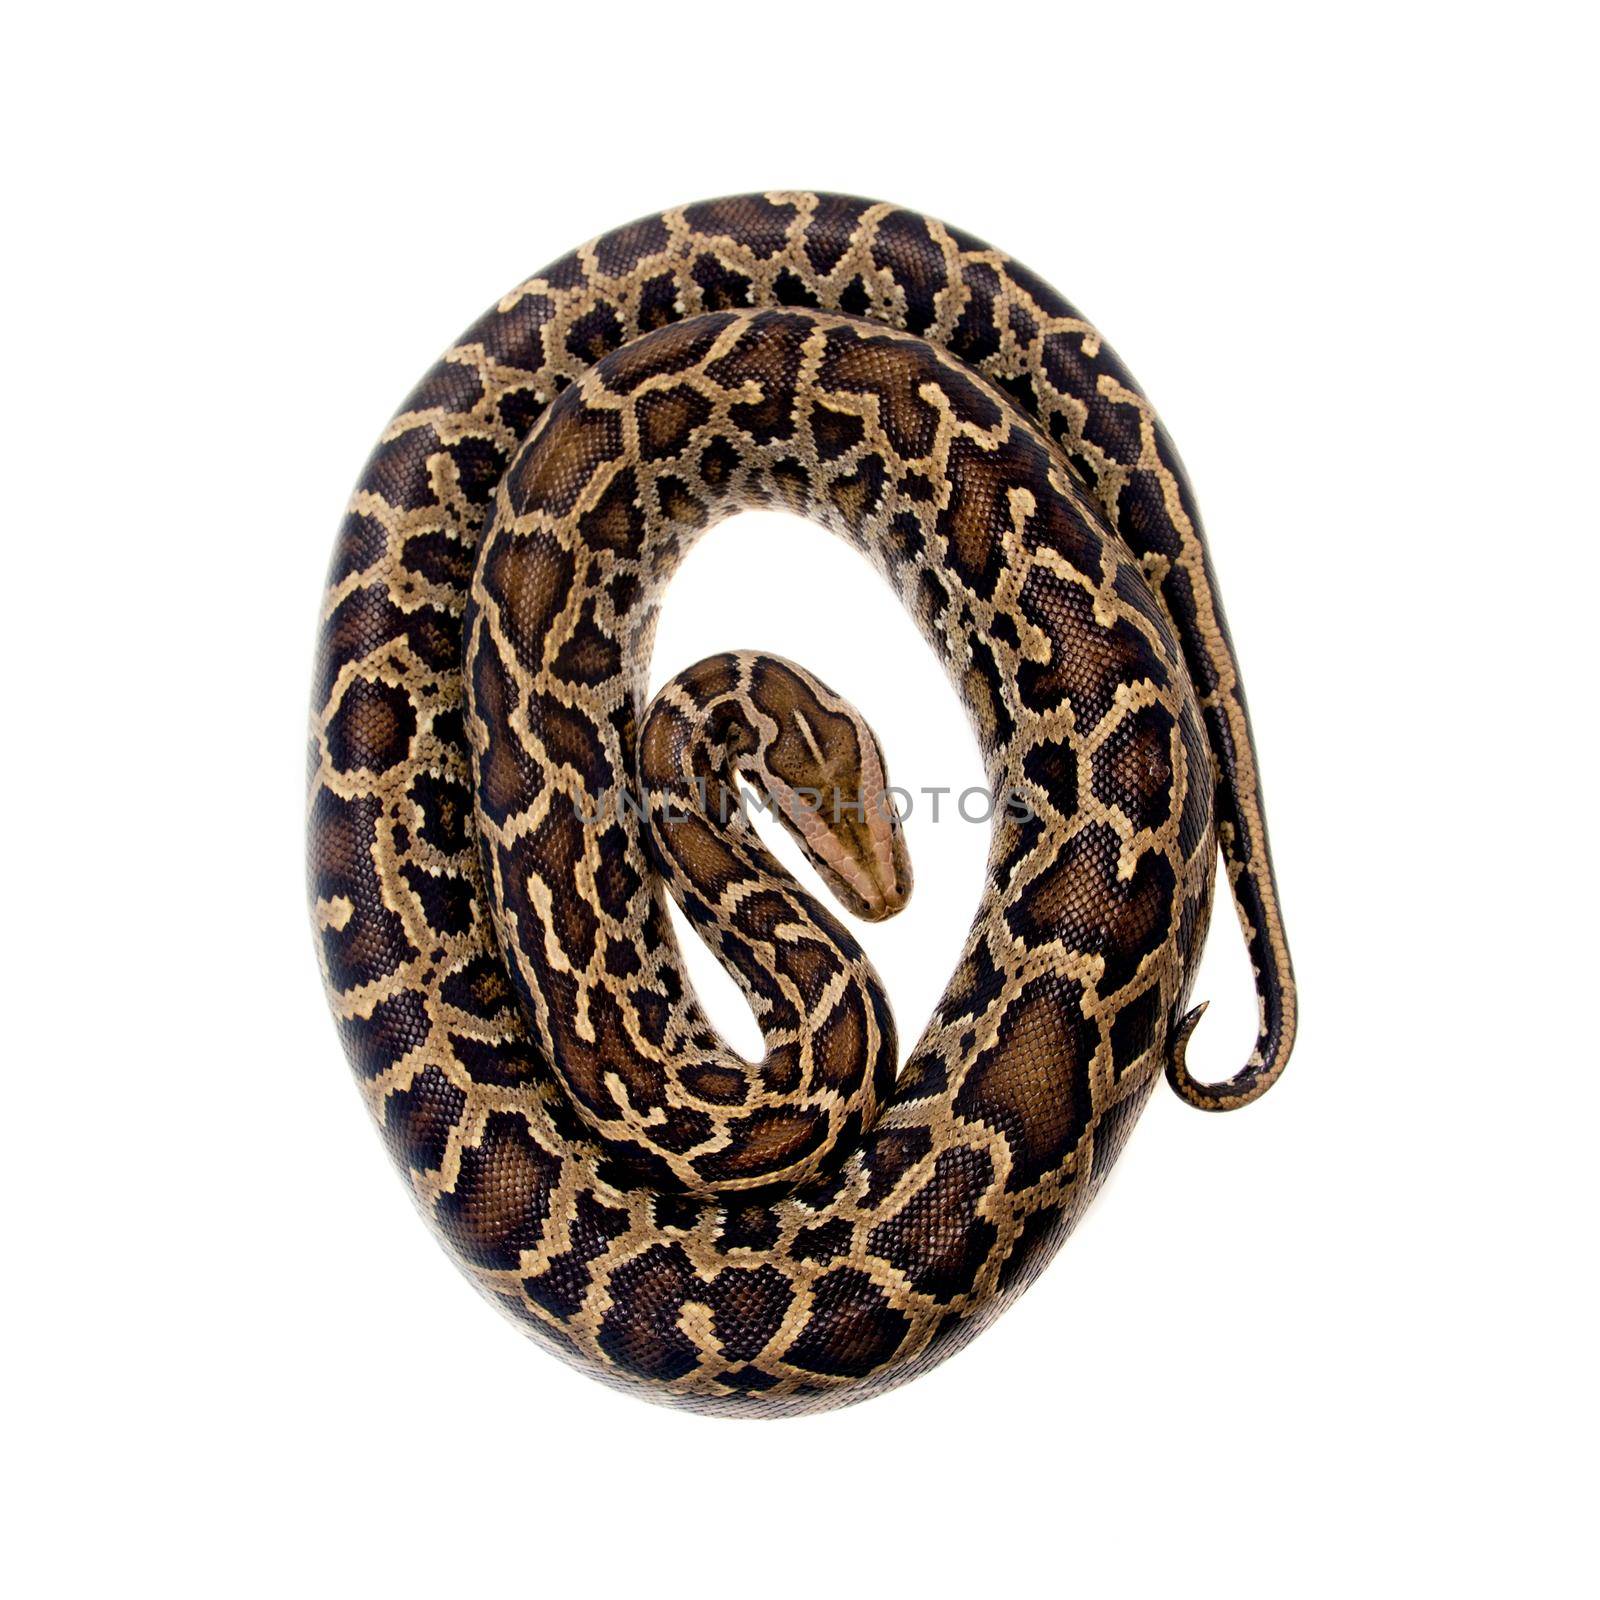 Burmese python on white background by RosaJay